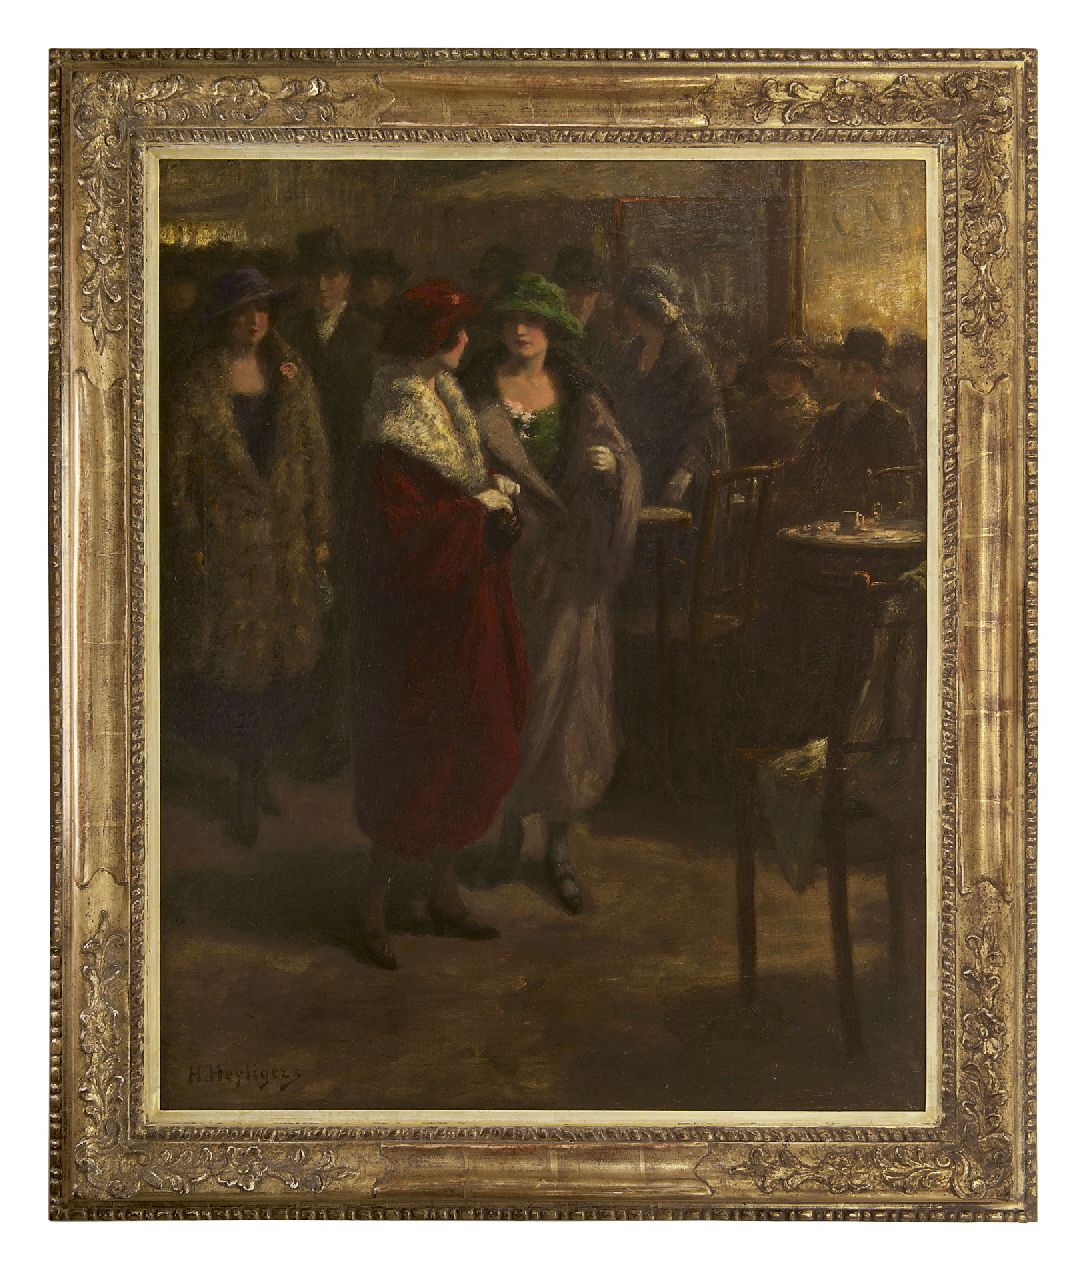 Heijligers H.  | Hendrik 'Henri' Heijligers, Café, olieverf op doek 81,1 x 65,2 cm, gesigneerd linksonder